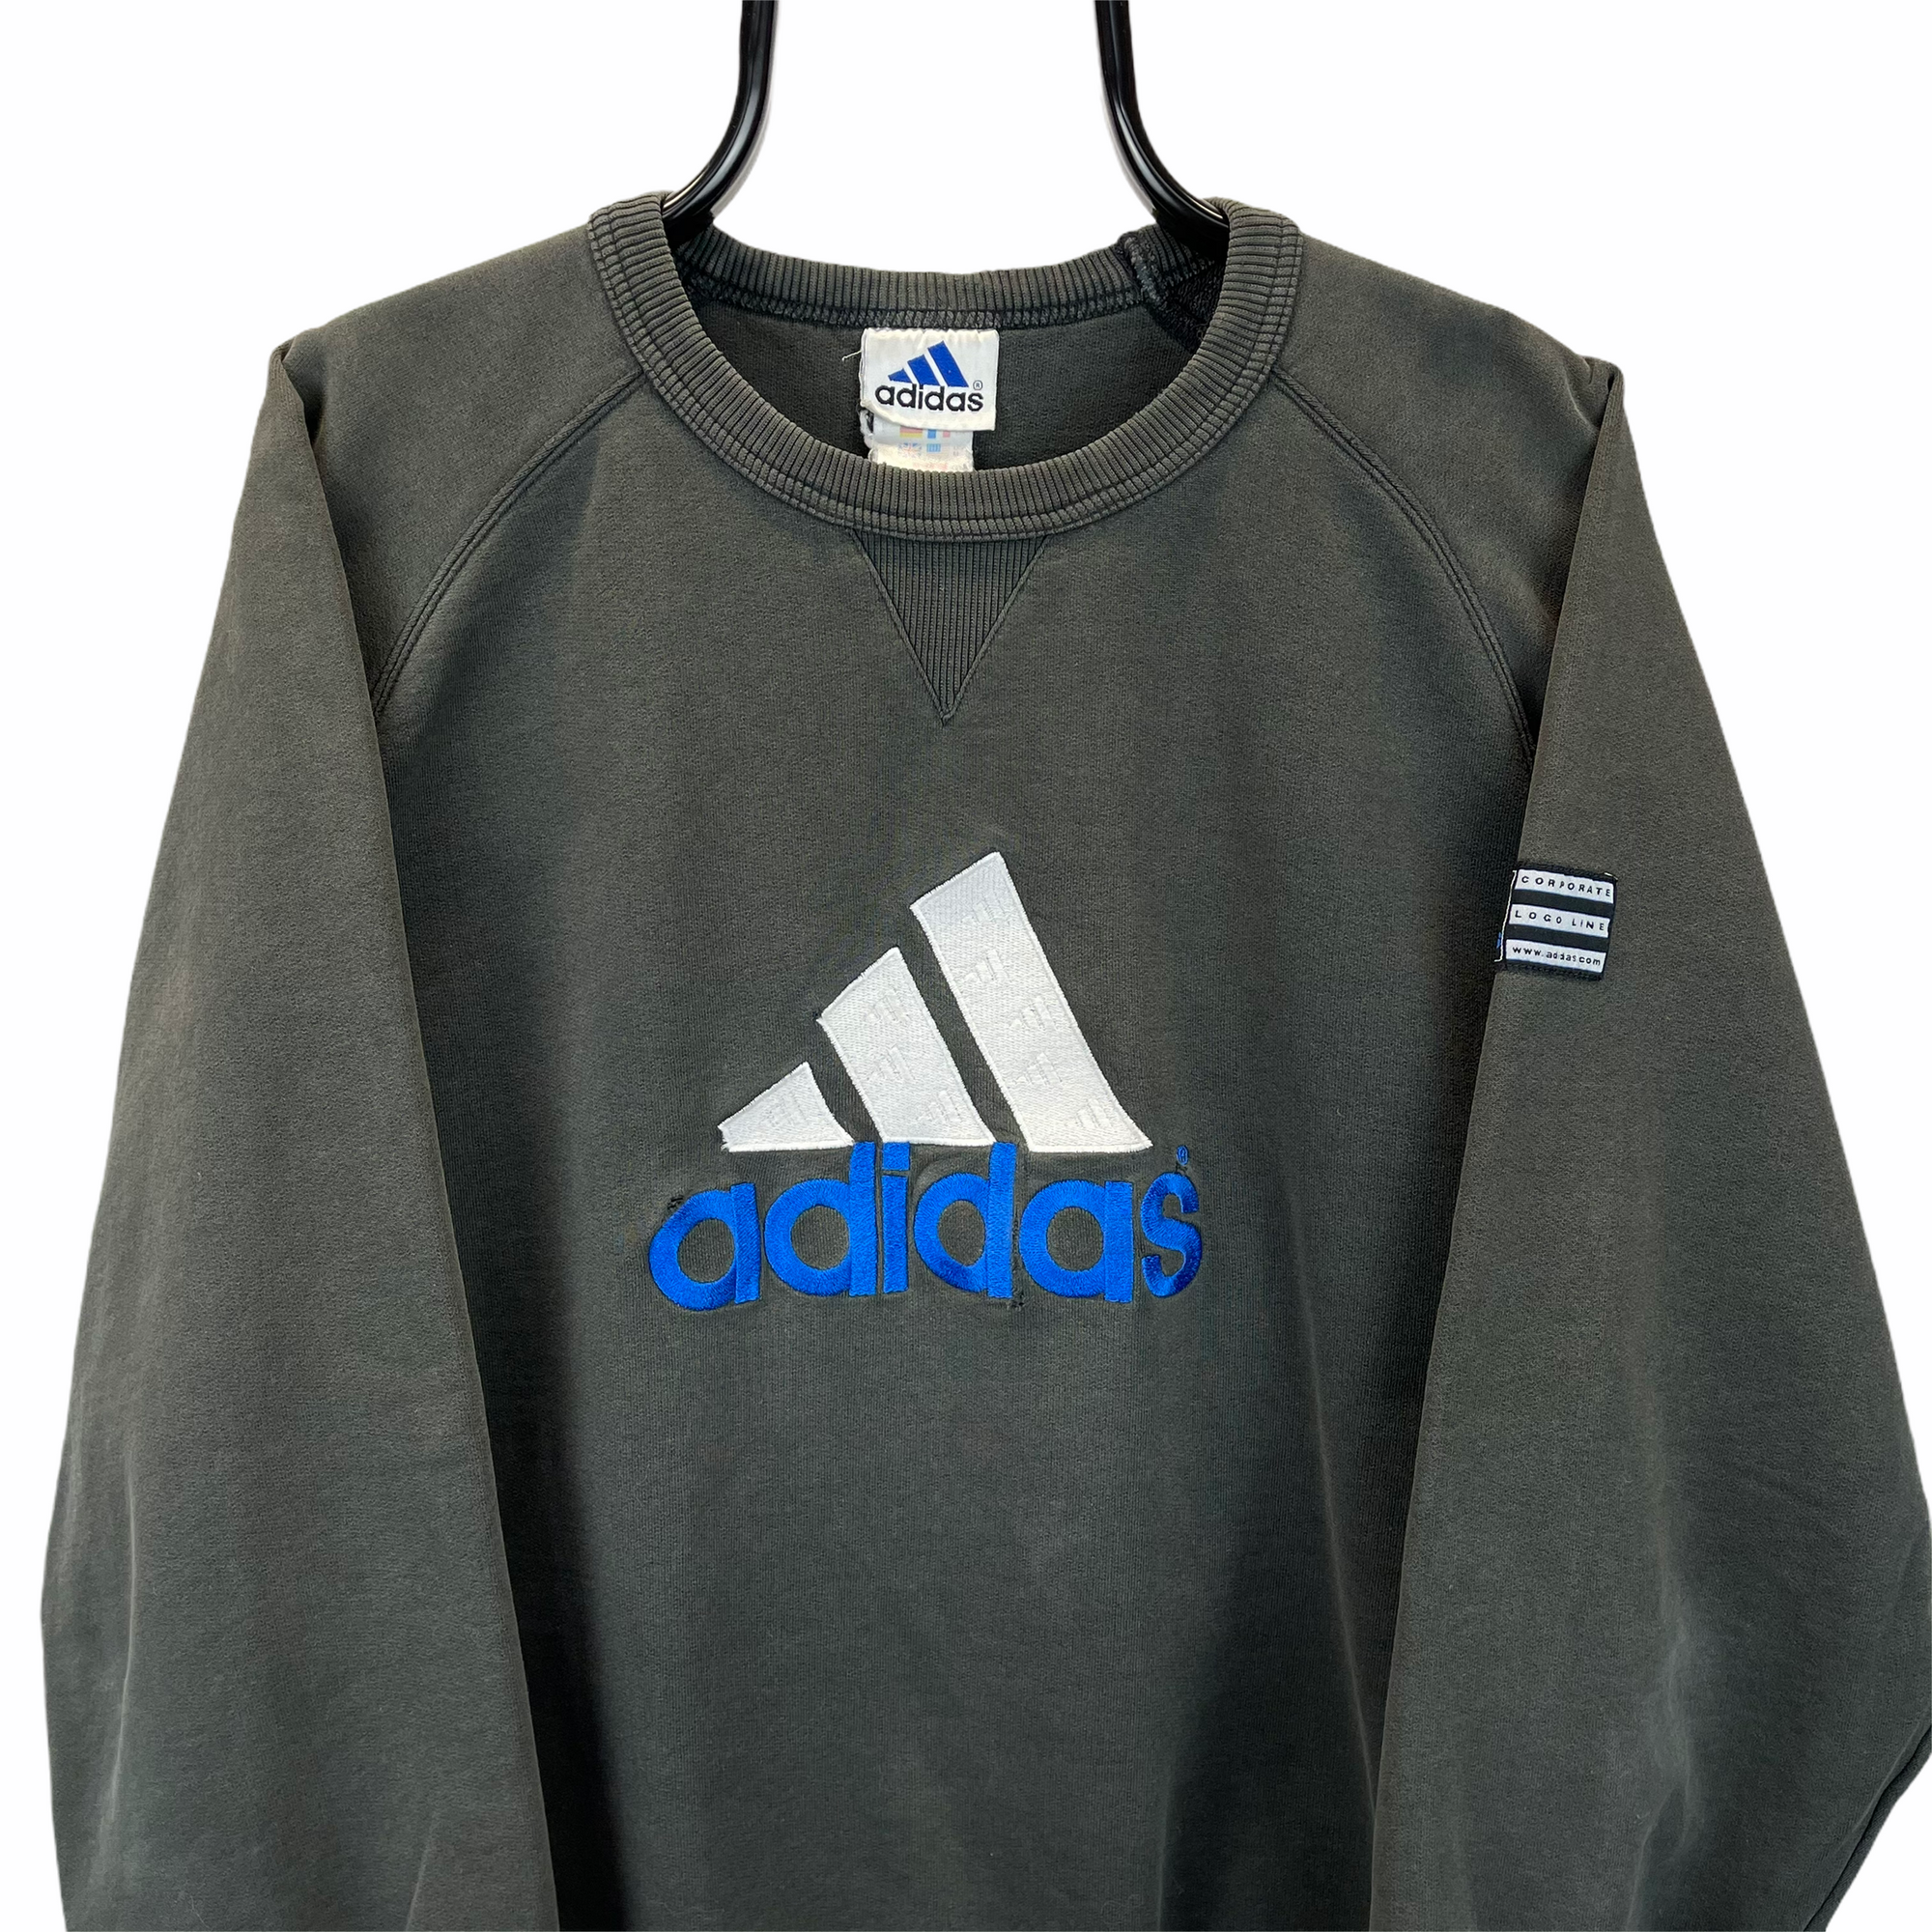 Vintage 90s Adidas Spellout Sweatshirt in Black, Blue & White - Men's Large/Women's XL